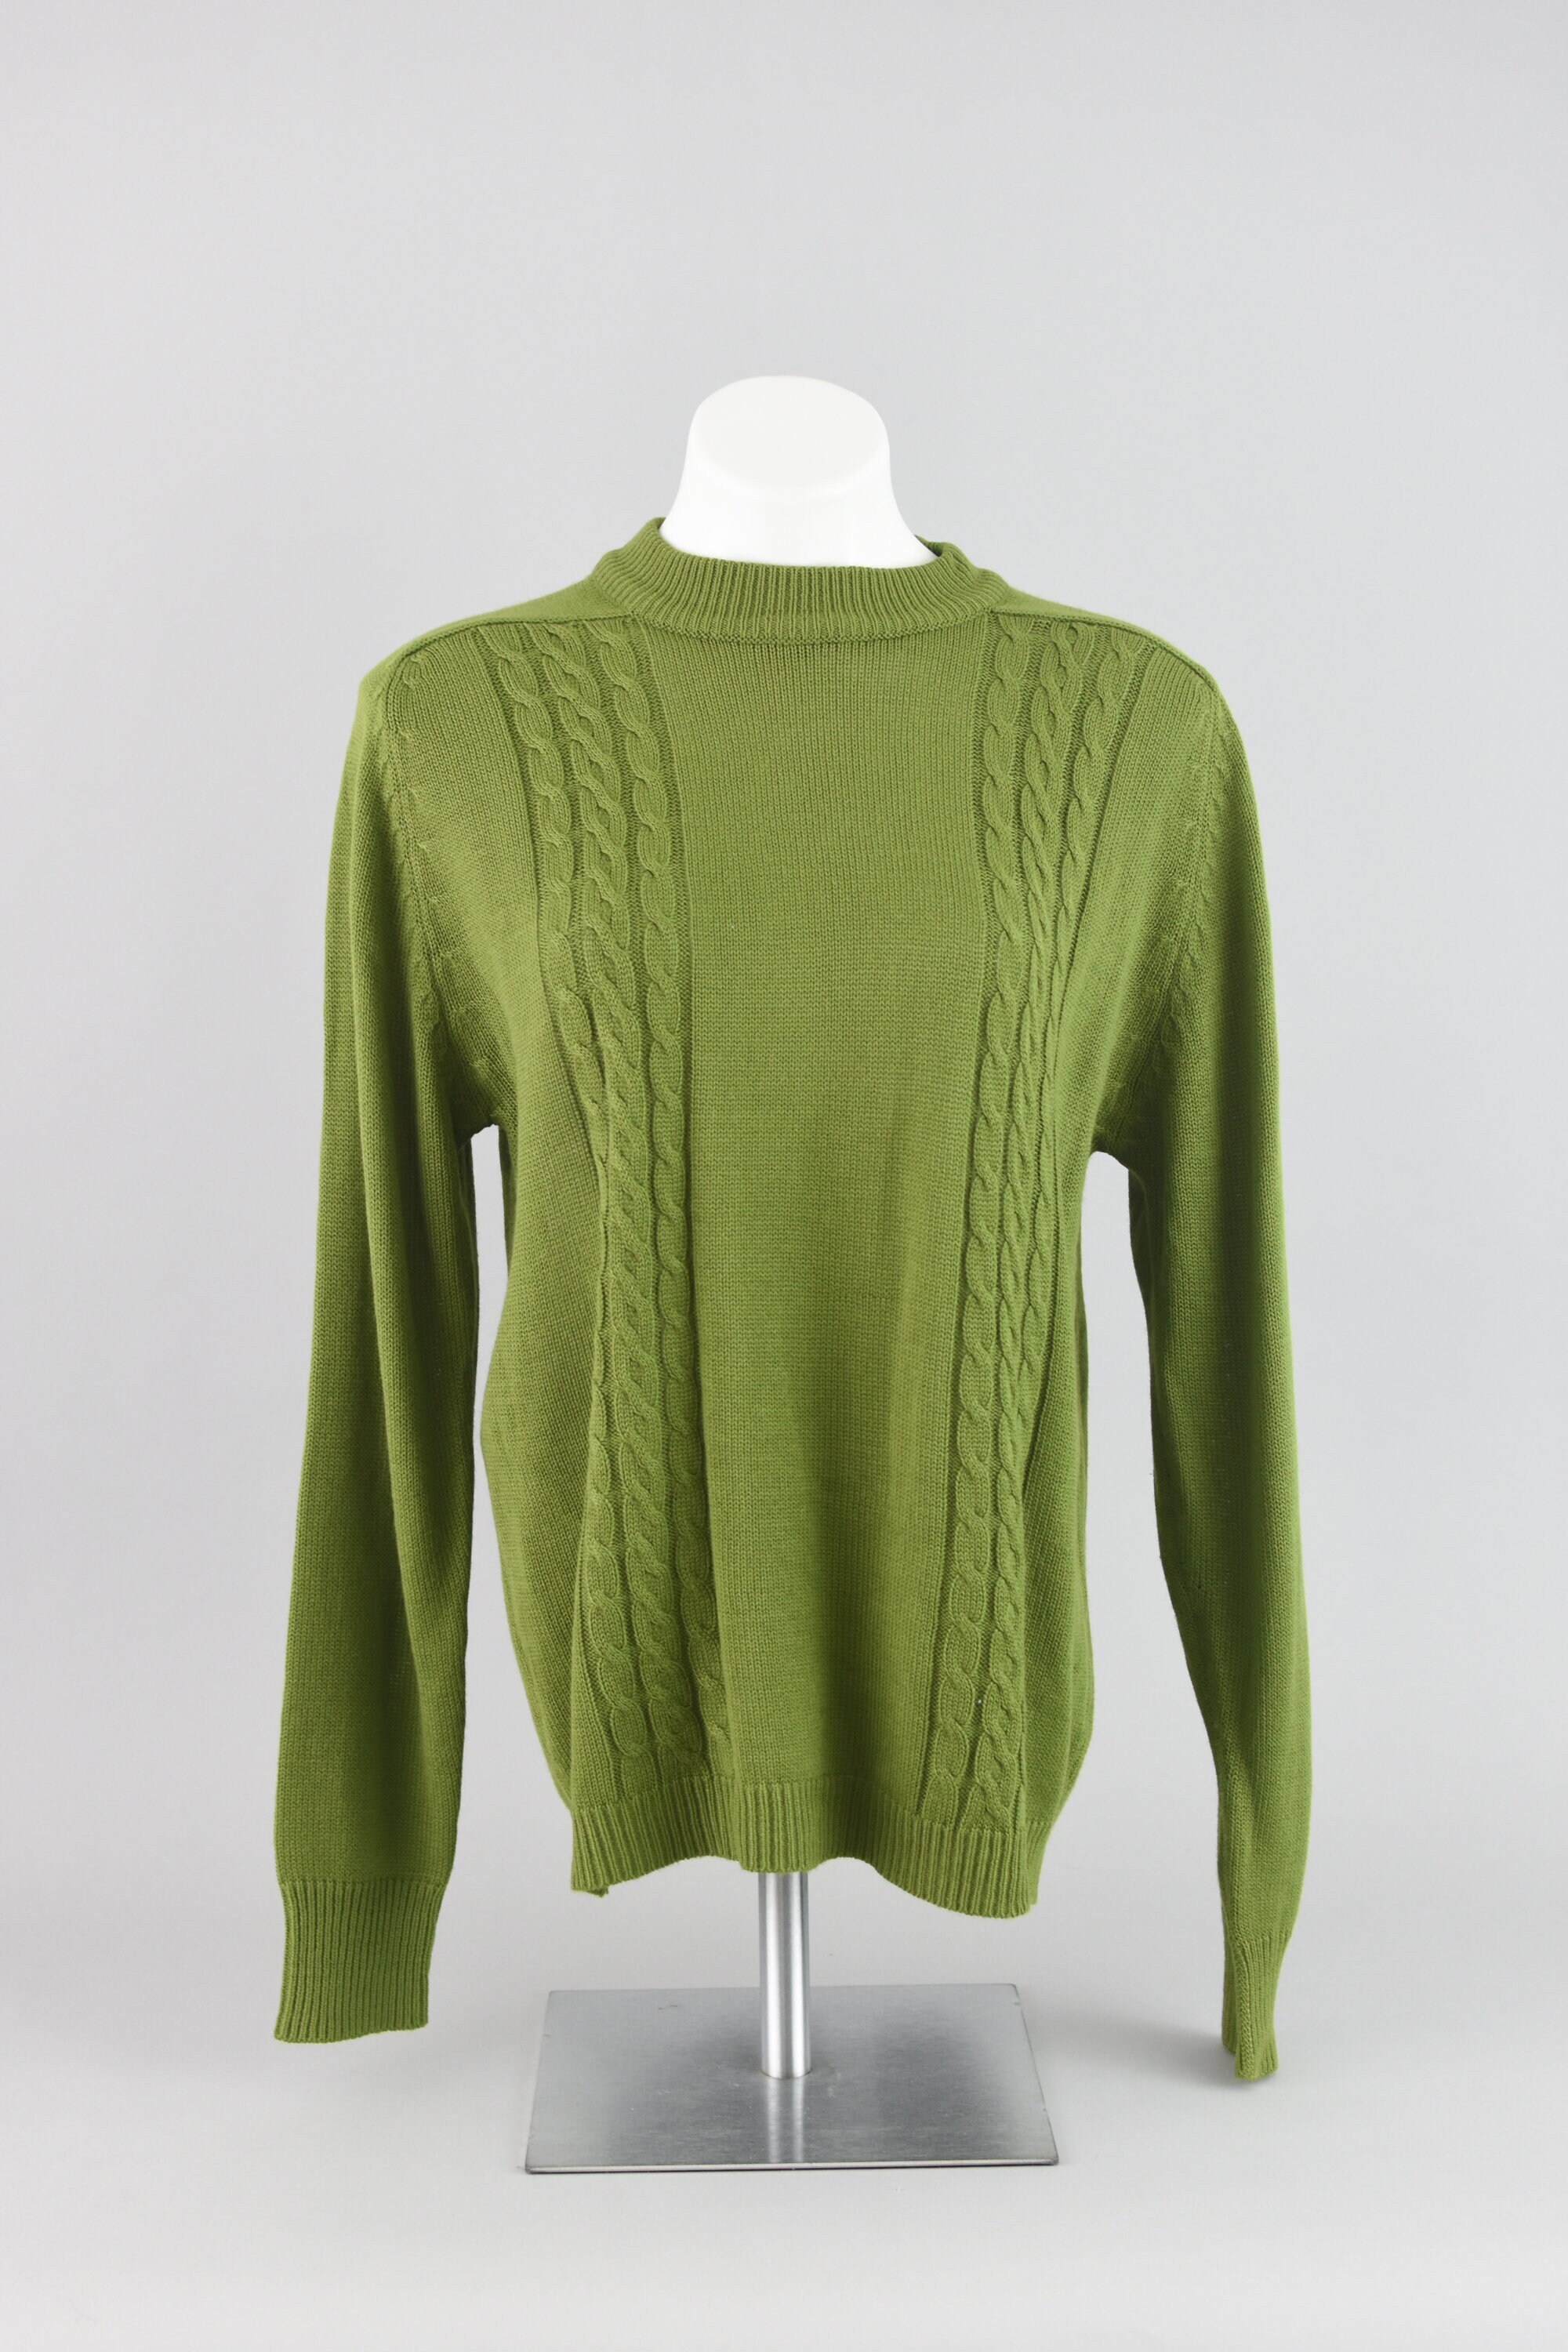 70s Cable Knit Gradient Mockneck Sweater Men's Medium 